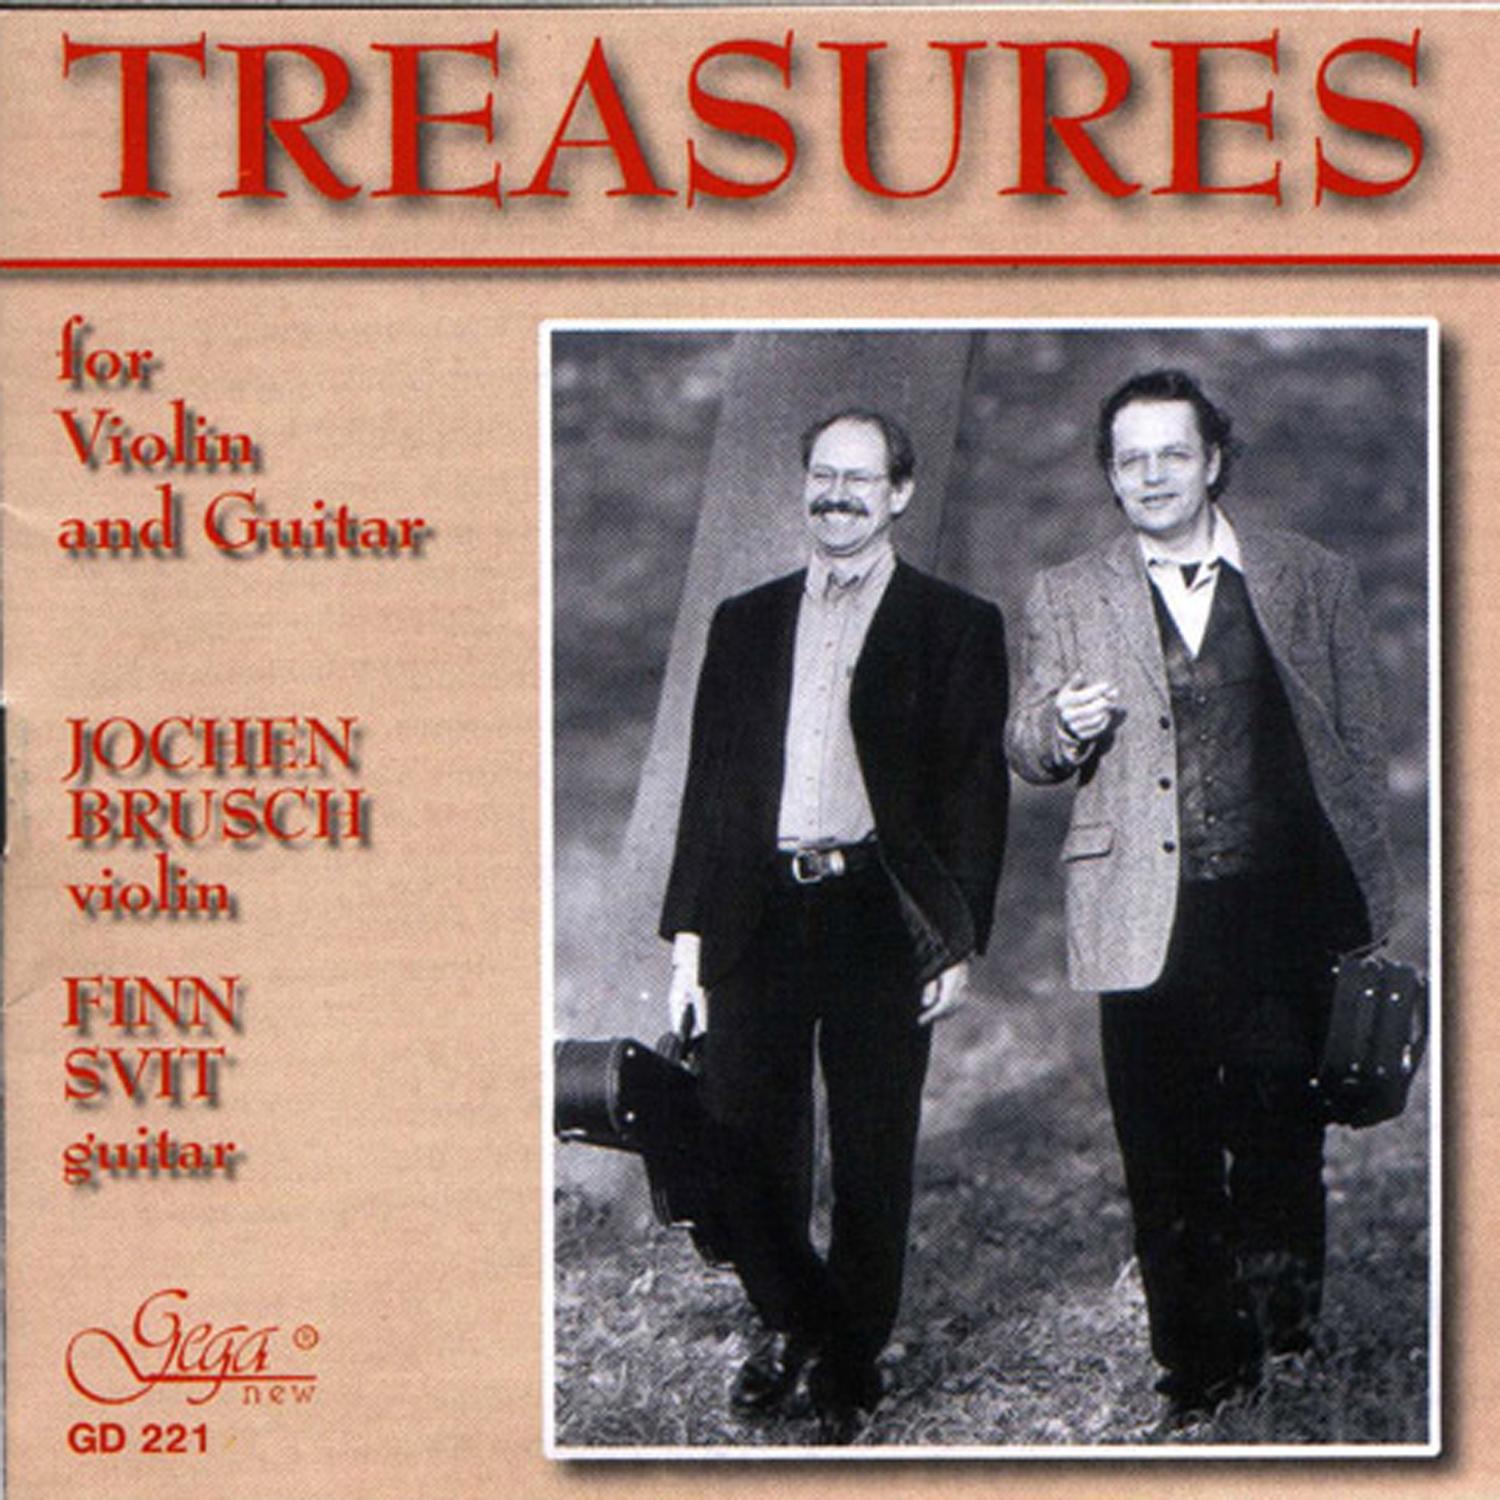 Treasures for Violin and Guitar